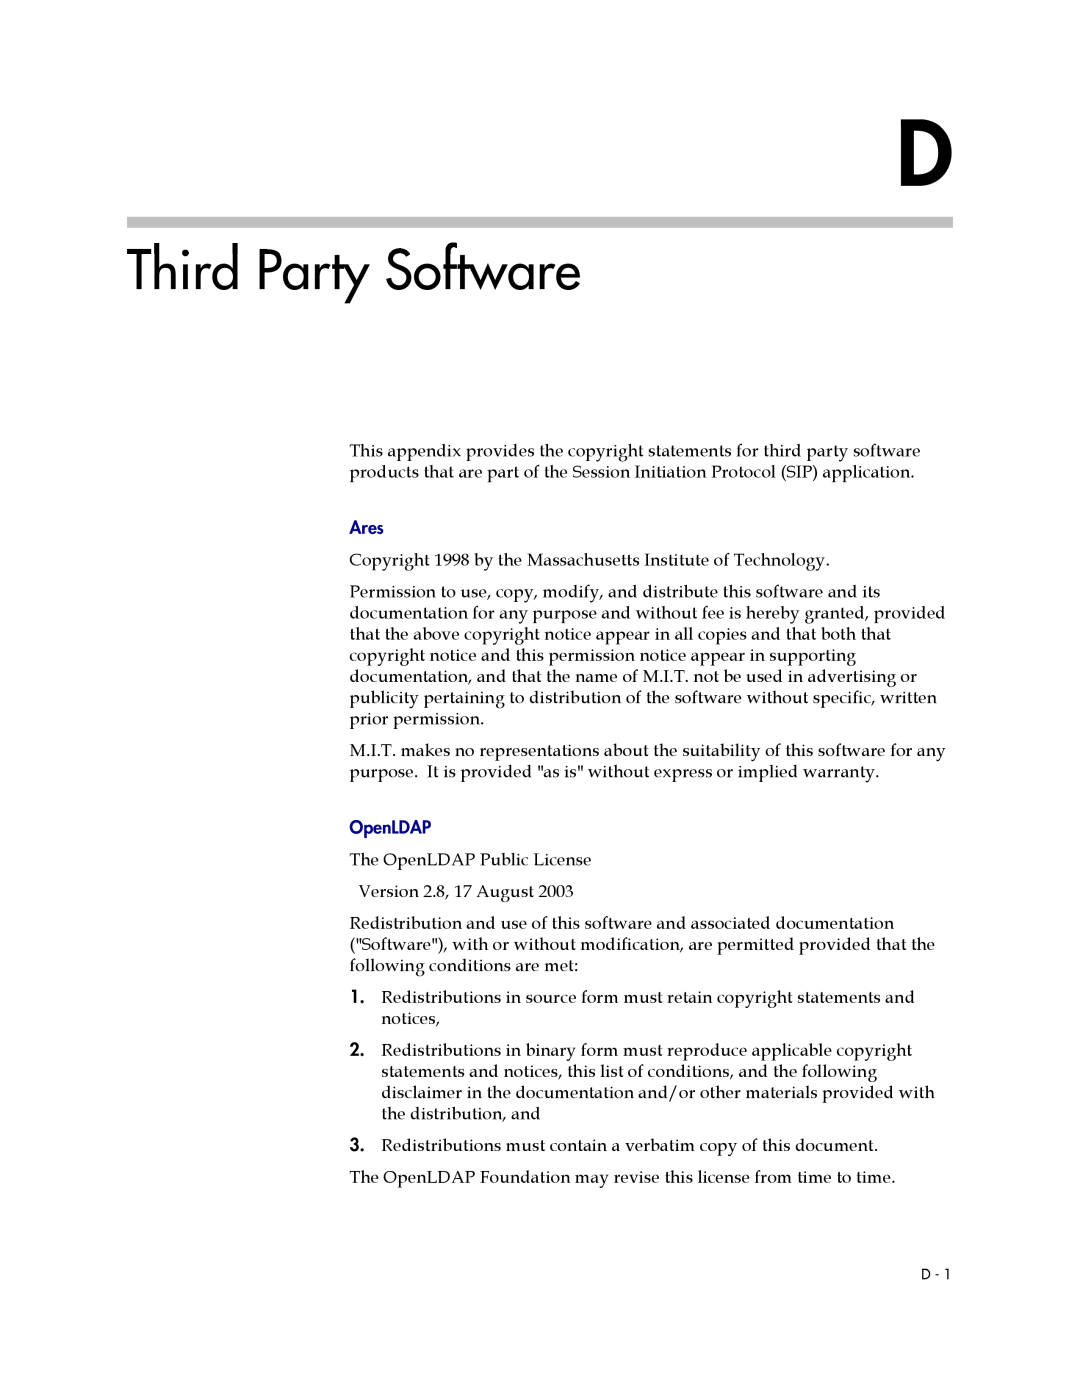 Polycom SIP 3.1 manual Third Party Software, Ares, OpenLDAP 